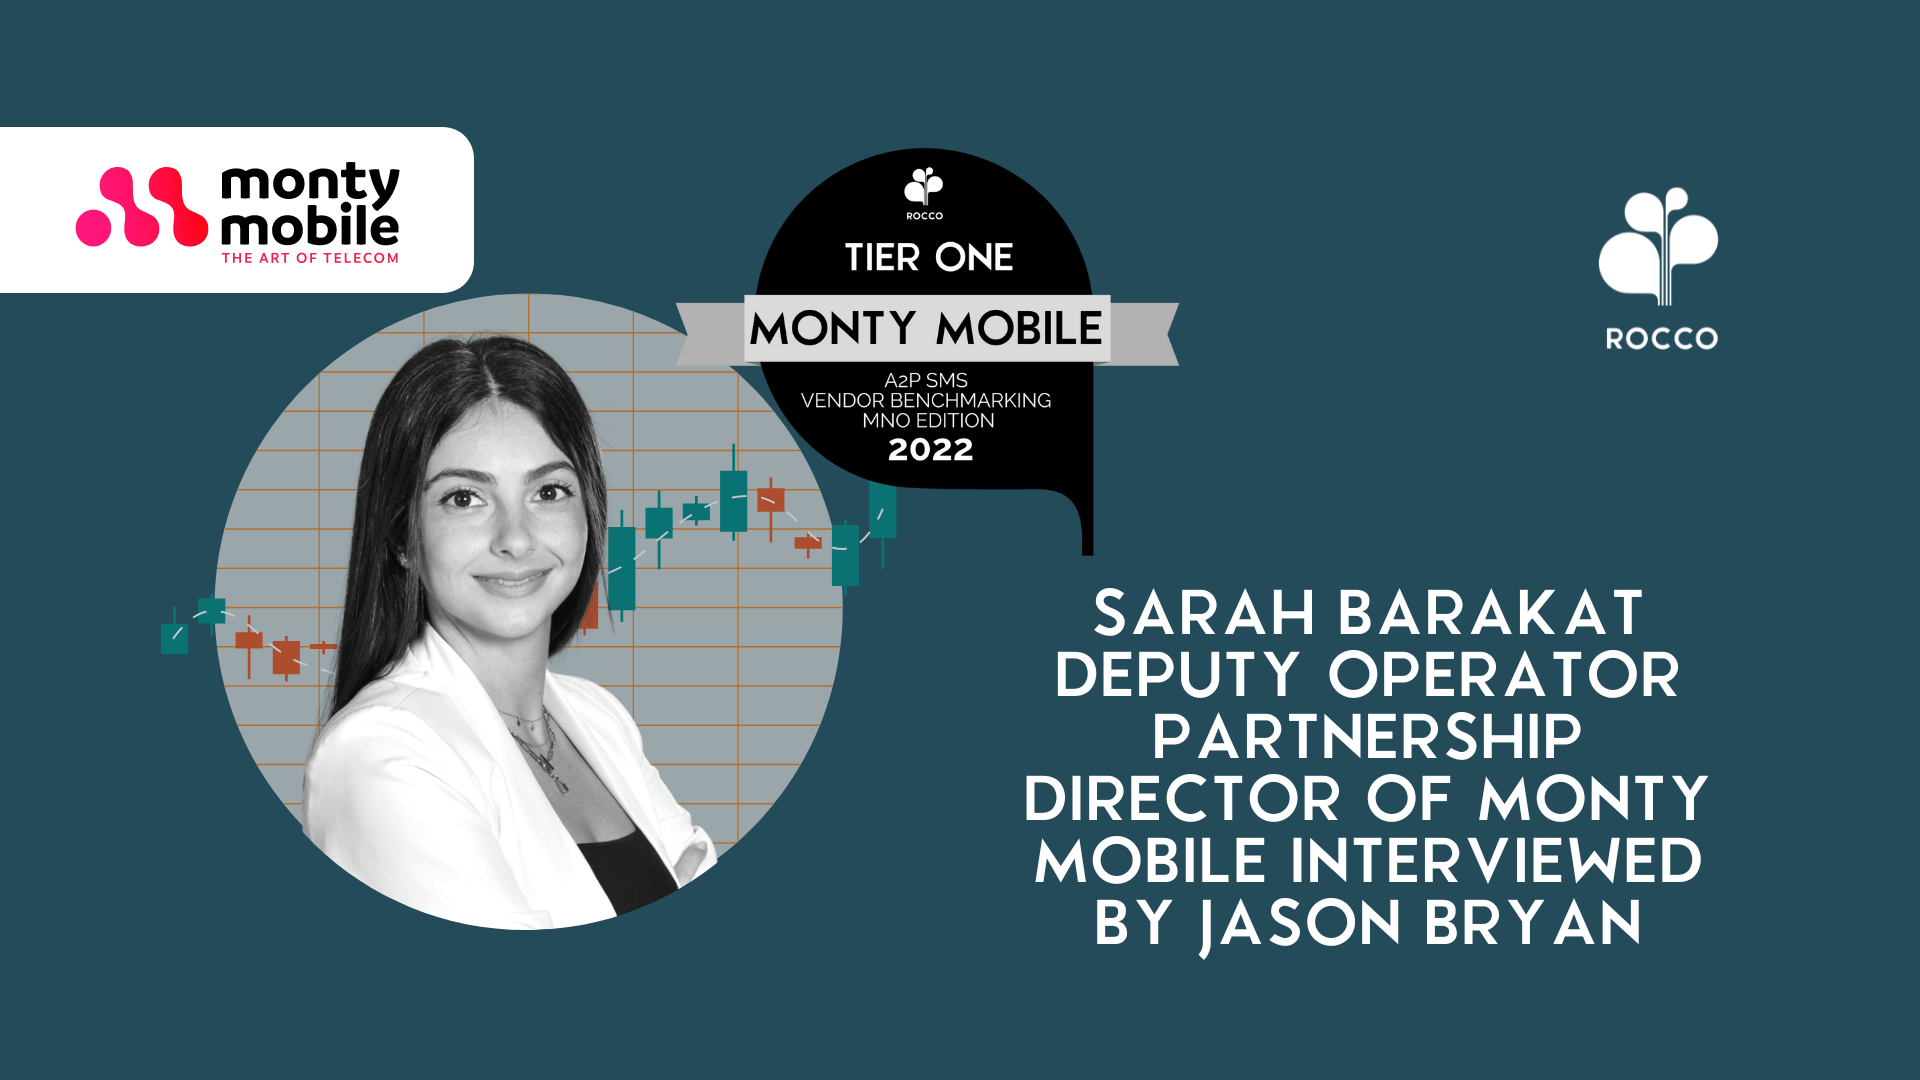 Sarah Barakat, Deputy Operator Partnership Director of Monty Mobile, interviewed by Jason Bryan